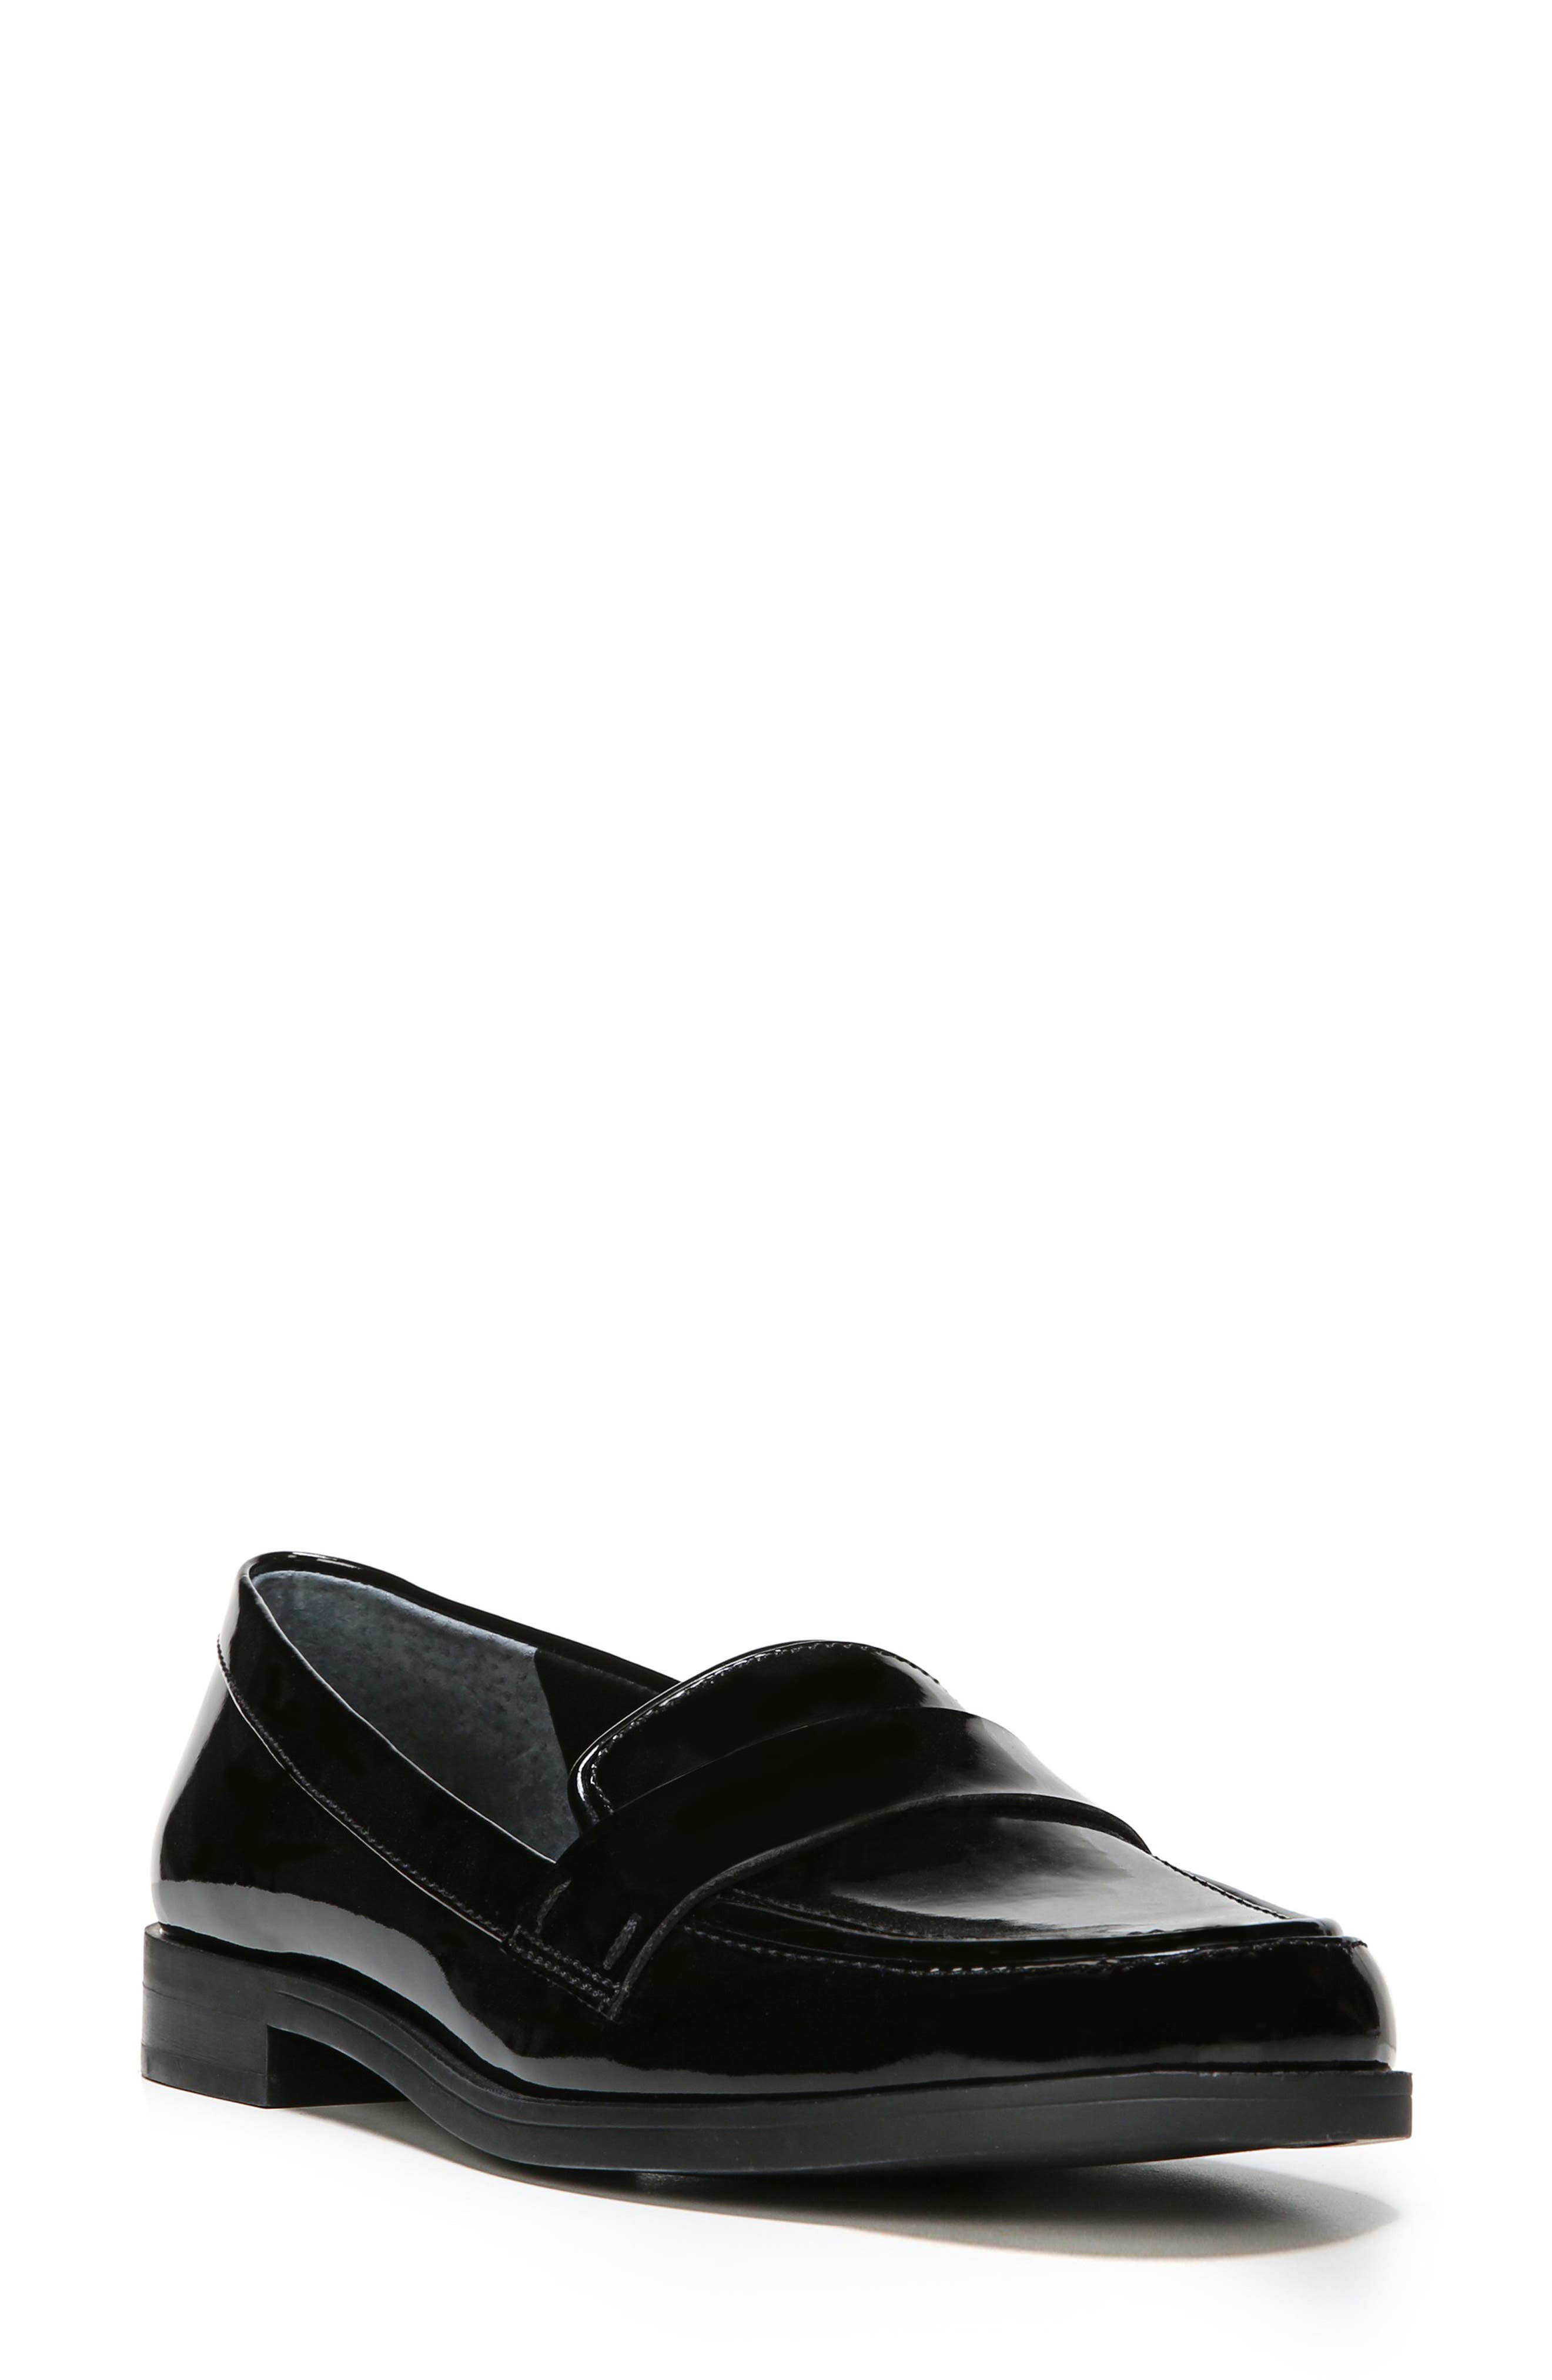 UPC 093638671506 product image for Women's Franco Sarto Valera Loafer, Size 5 M - Black | upcitemdb.com